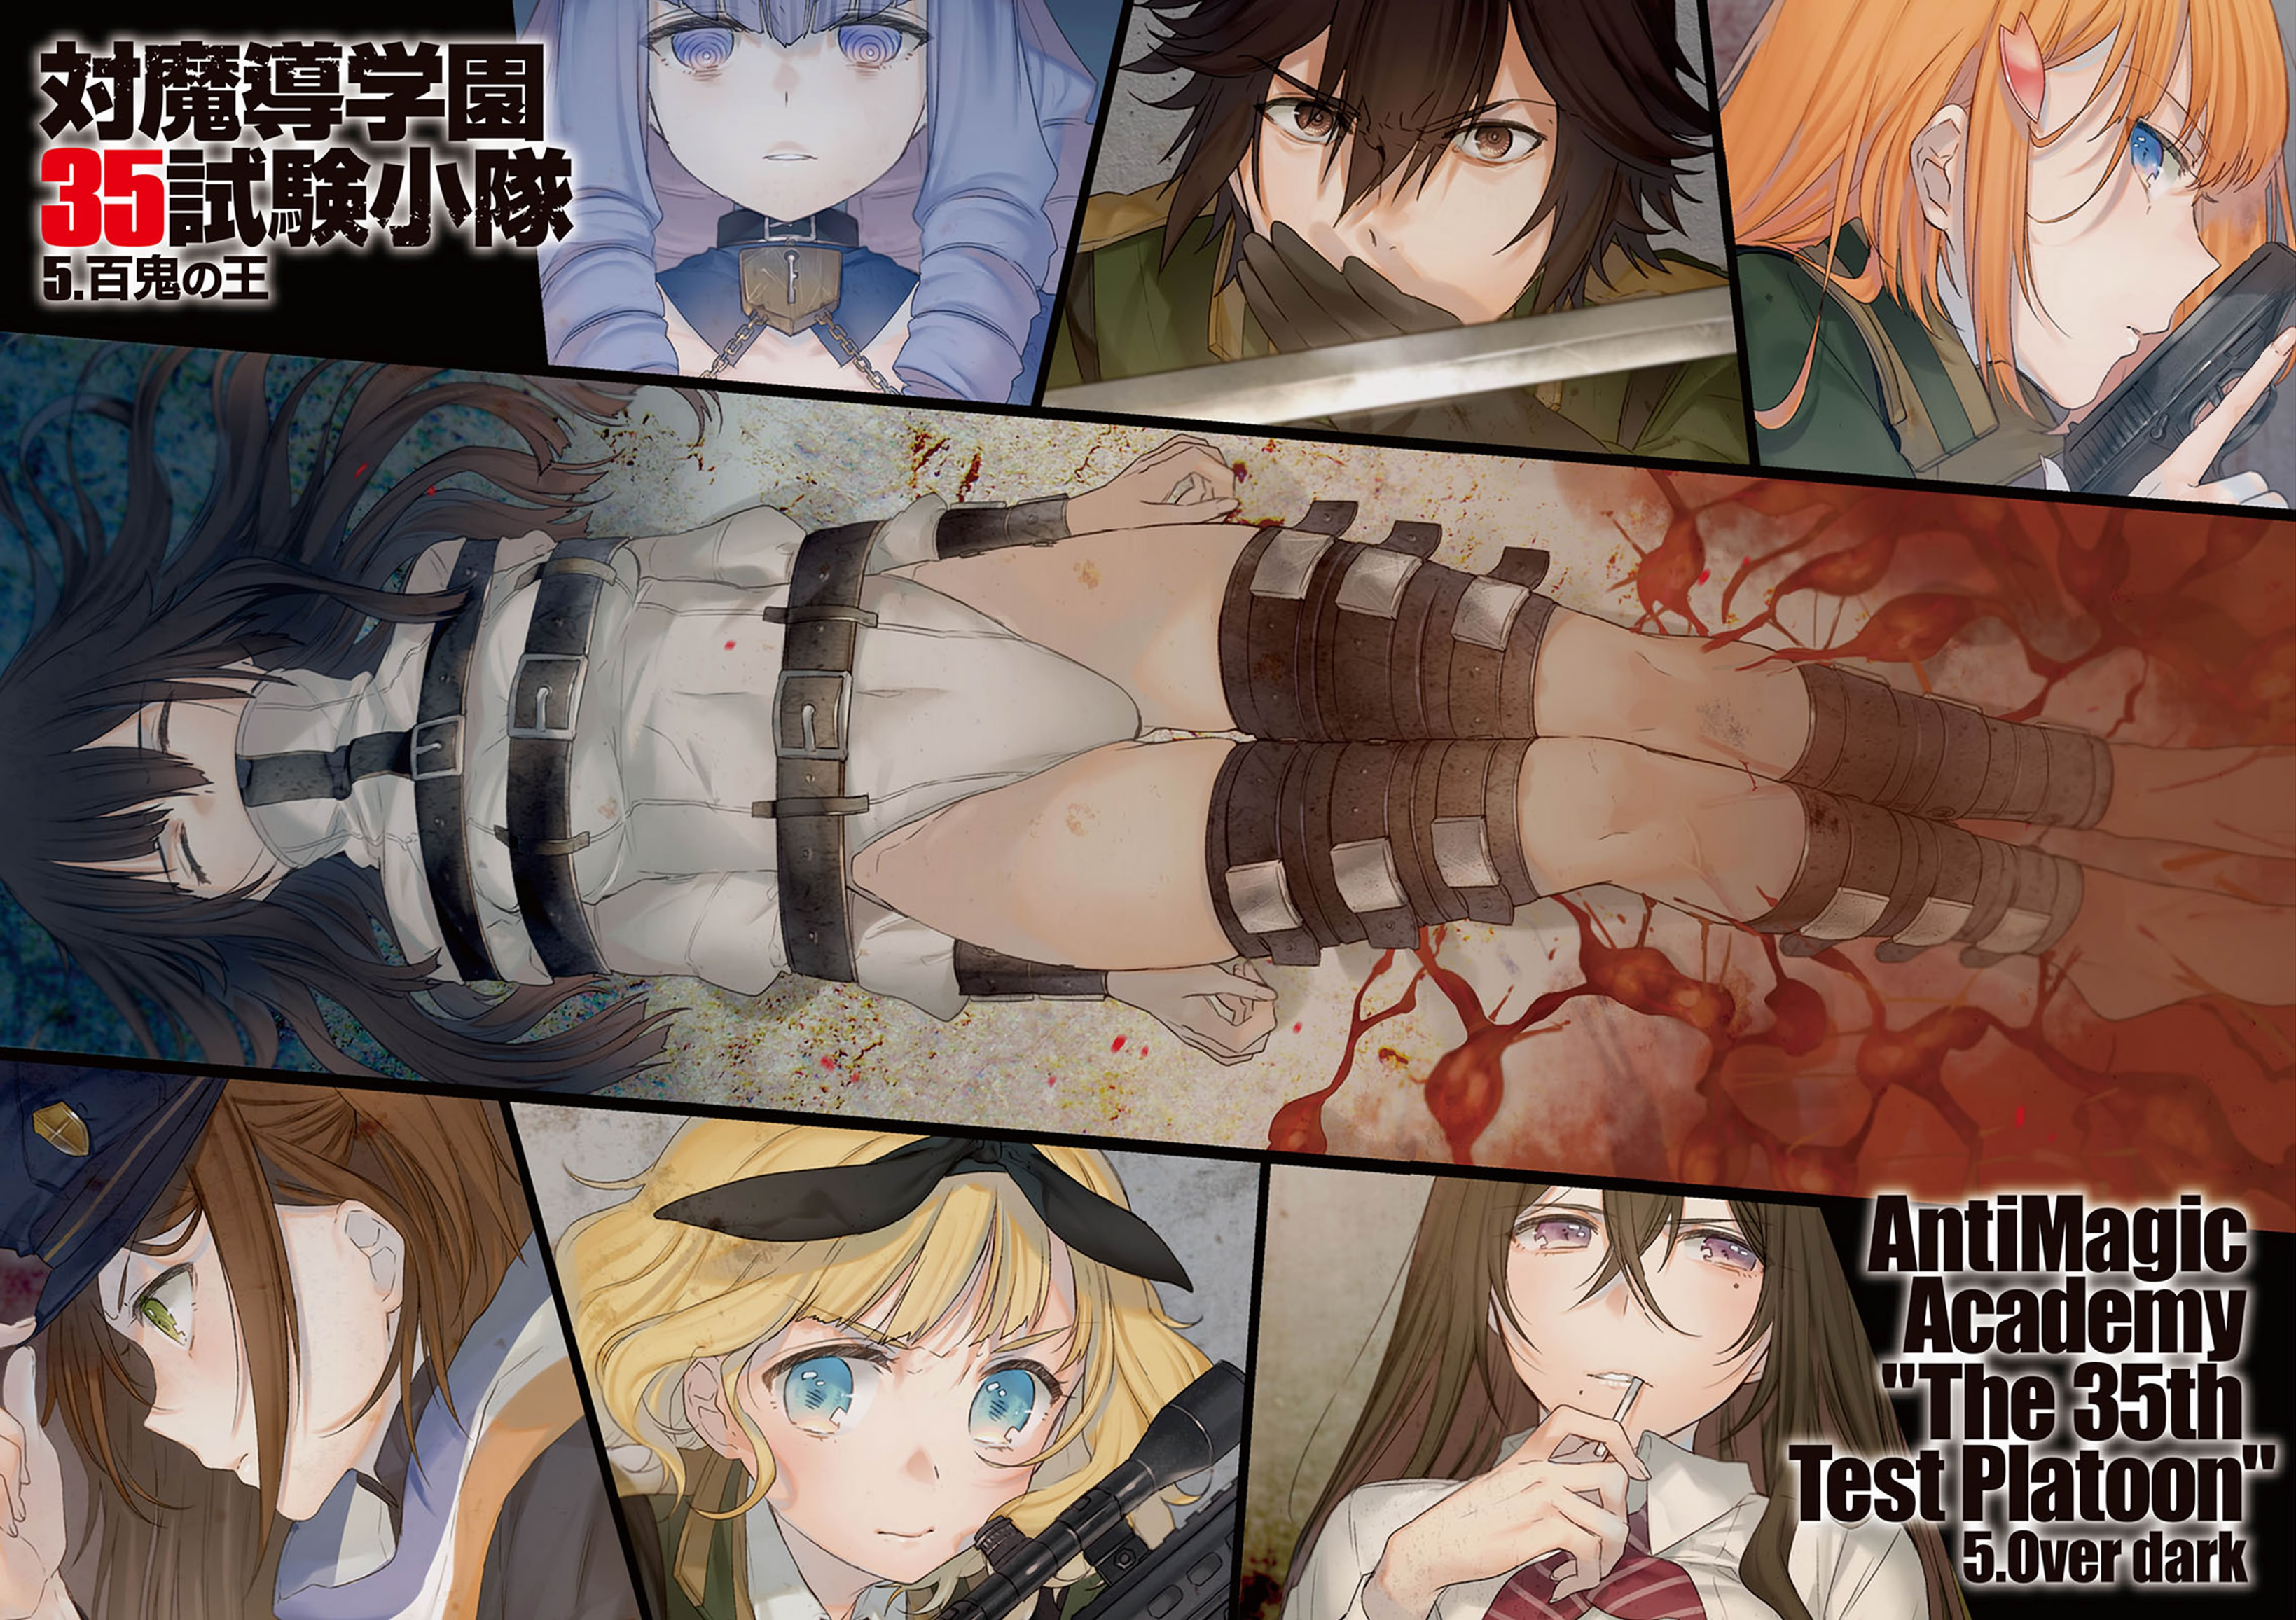 Anime AntiMagic Academy 35th Test Platoon HD Wallpaper